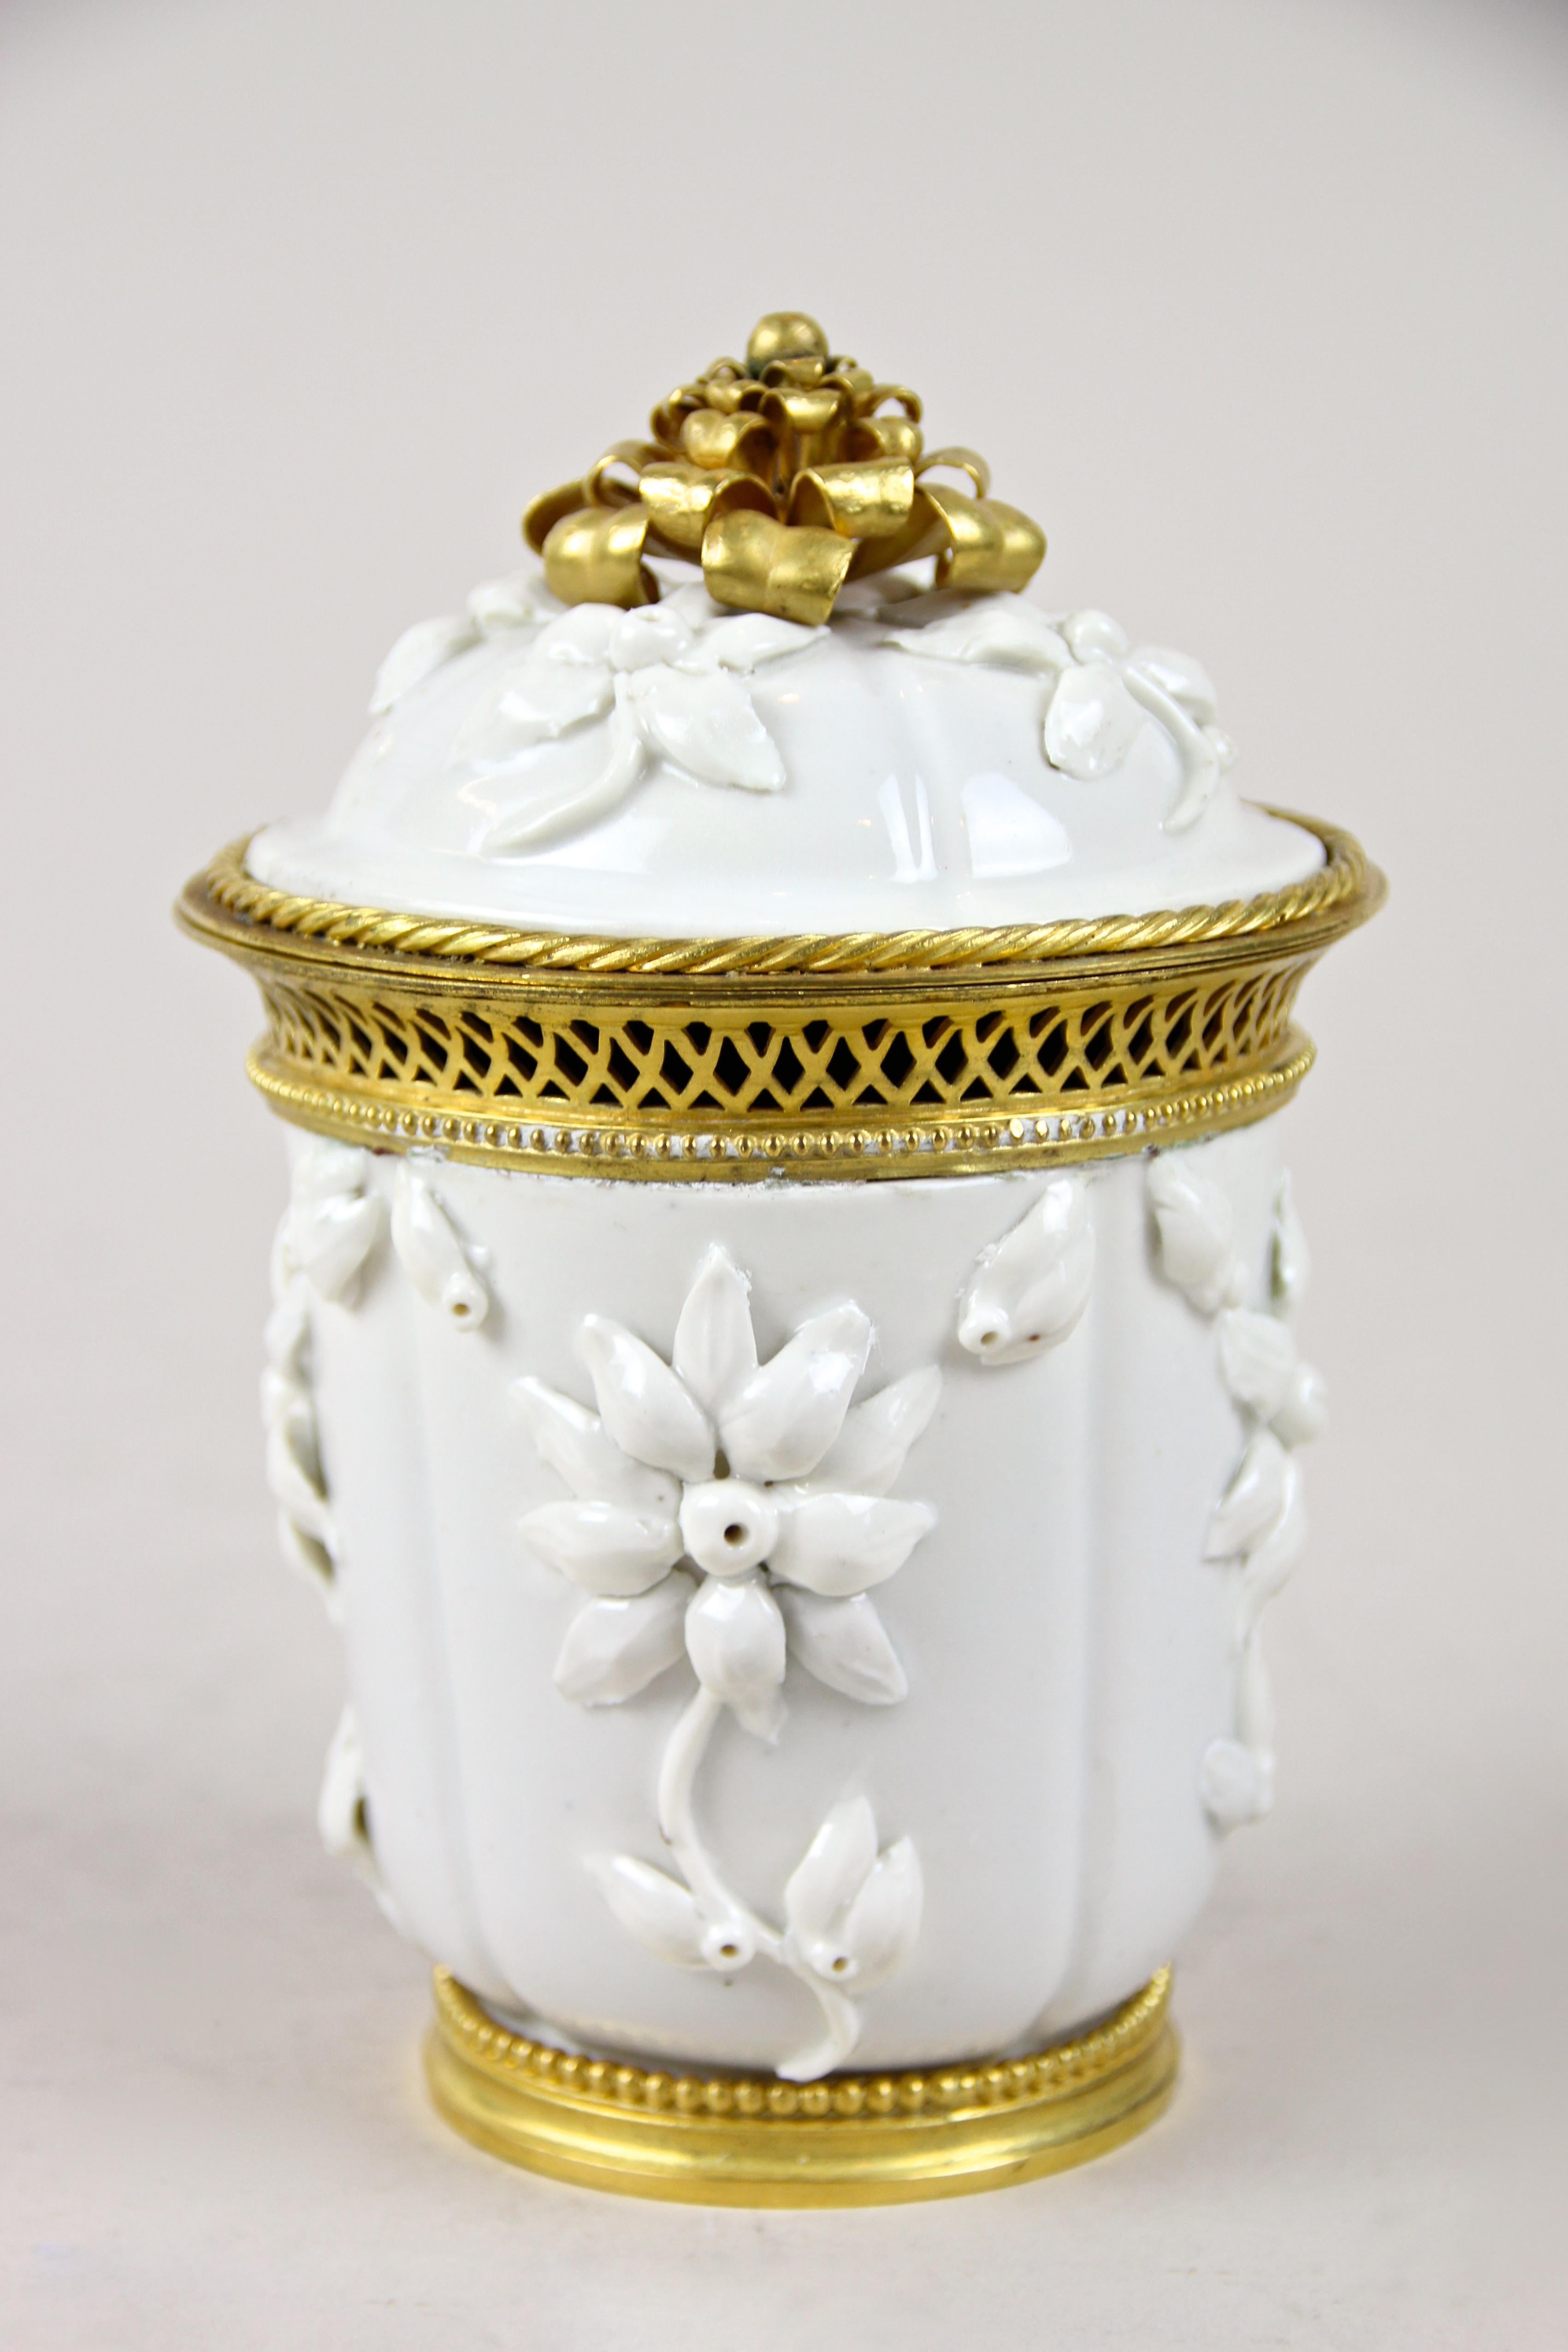 Baroque 18th Century Porcelain Jar with Lid by Saint Cloud, France, circa 1730